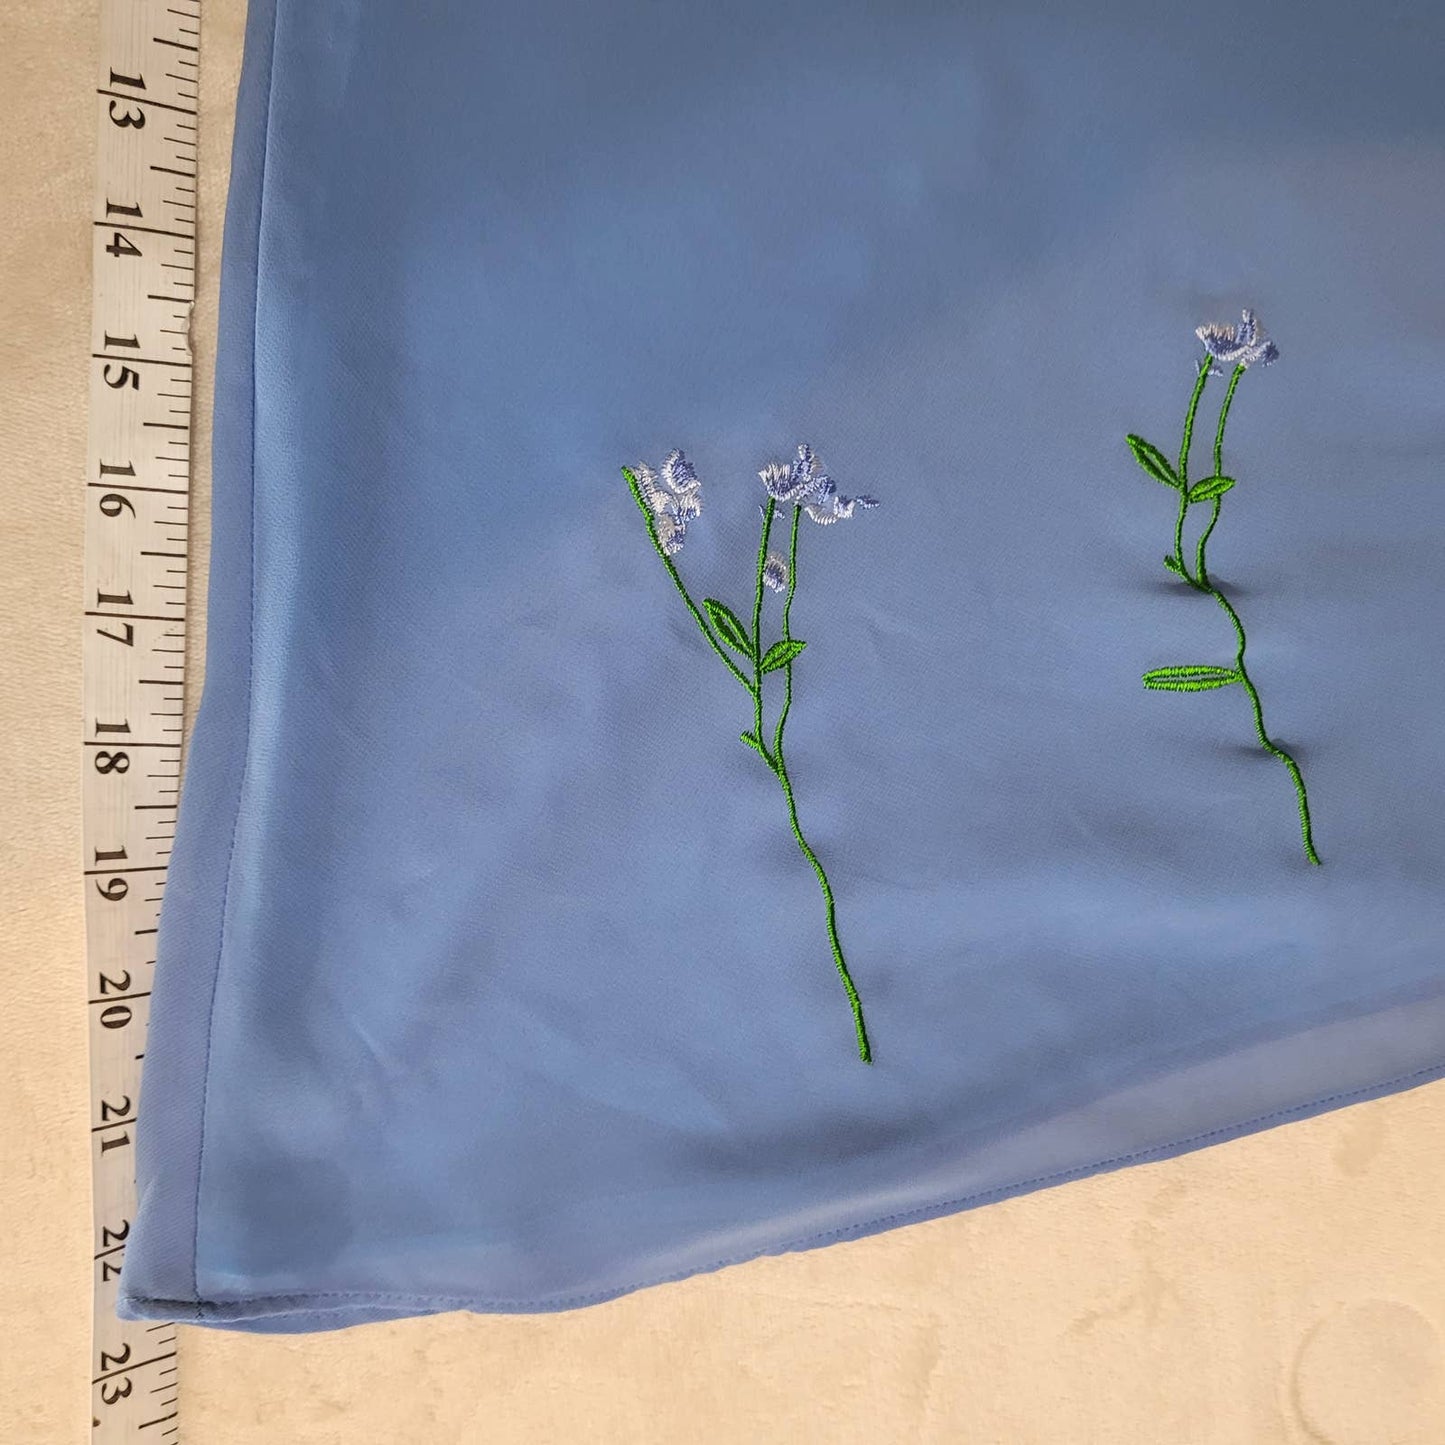 Amelia's Blue Chiffon Robe and Nightgown Set Embroidered Flowers - Size SmallMarkita's ClosetAmelia's